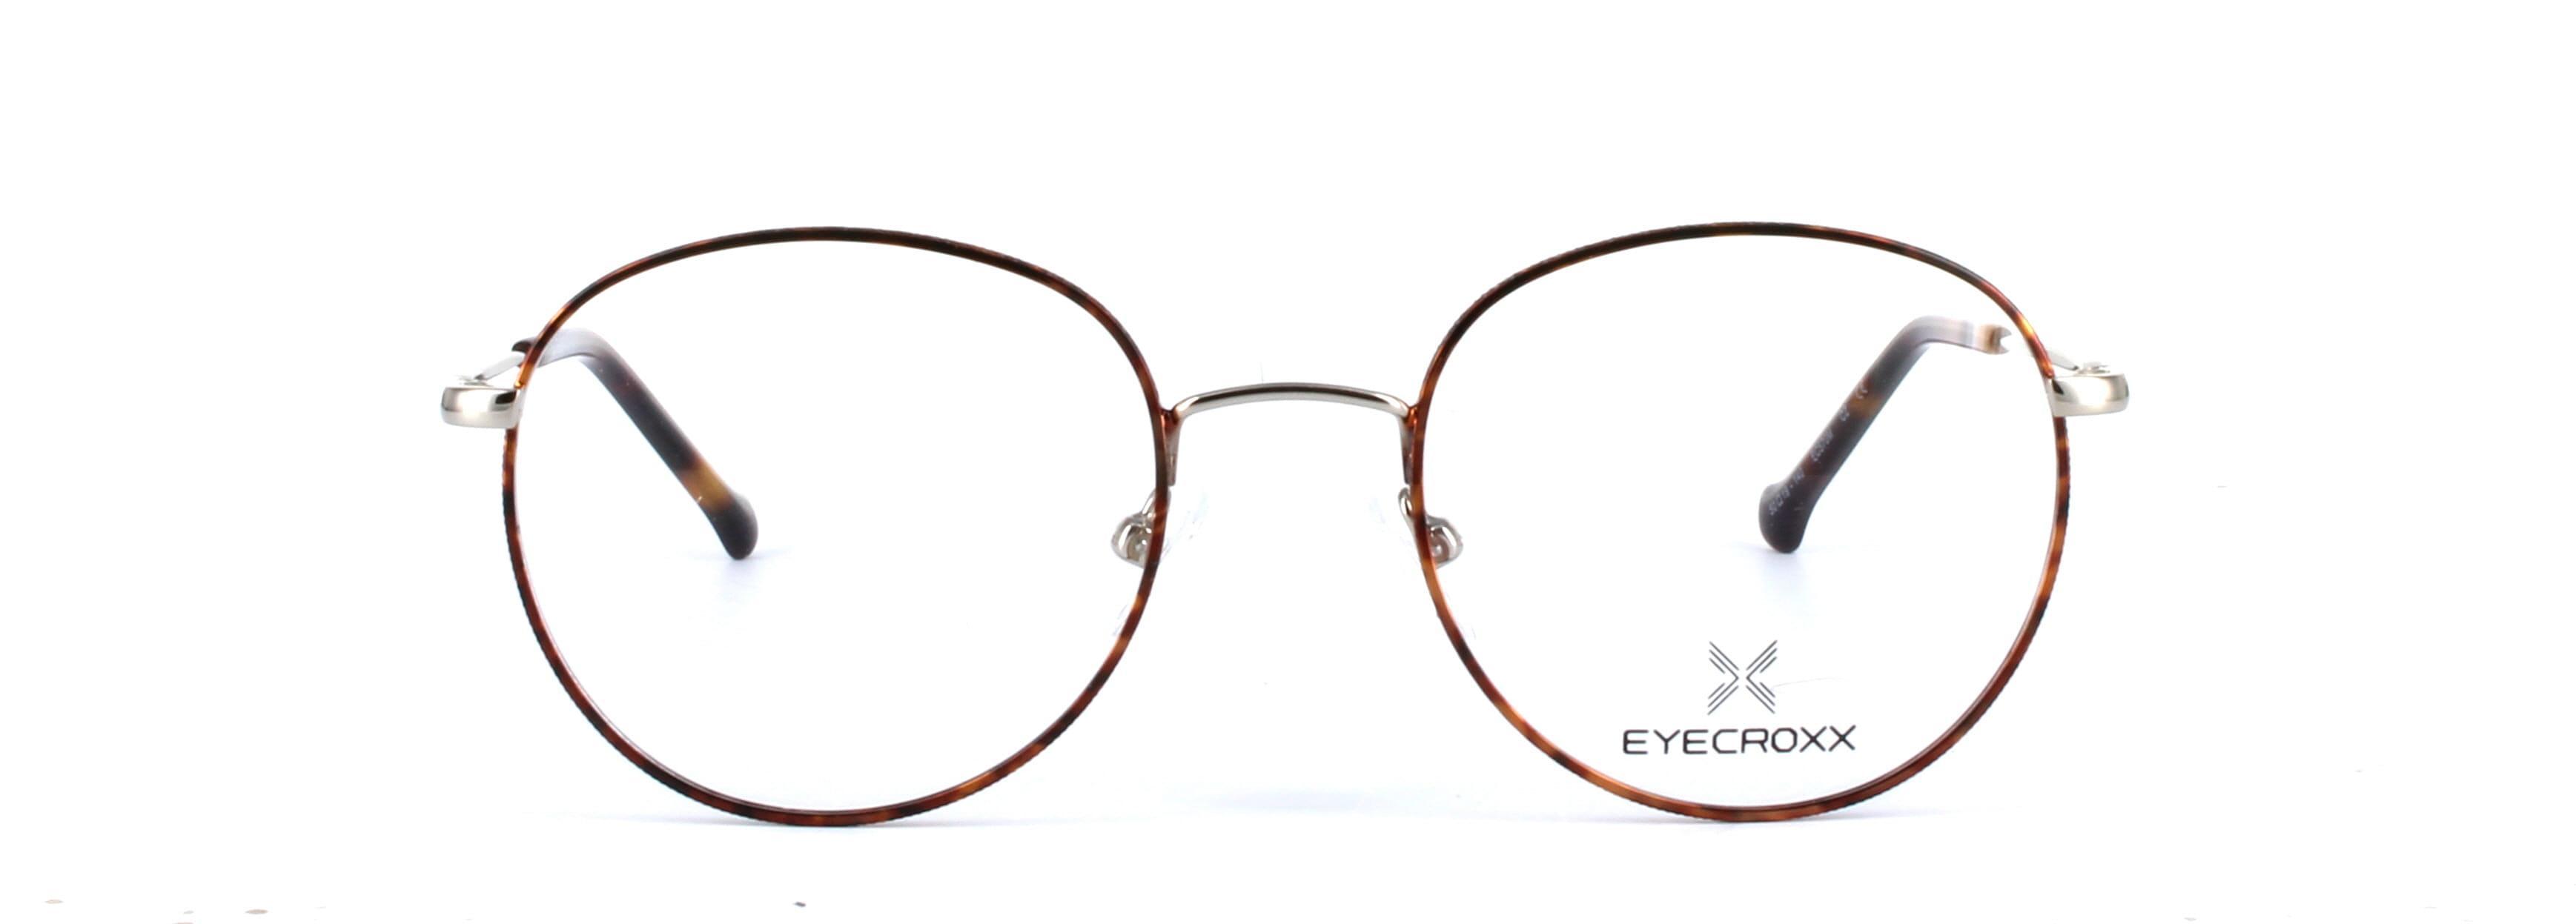 Eyecroxx 570 Tortoise Full Rim Round Metal Glasses - Image View 5